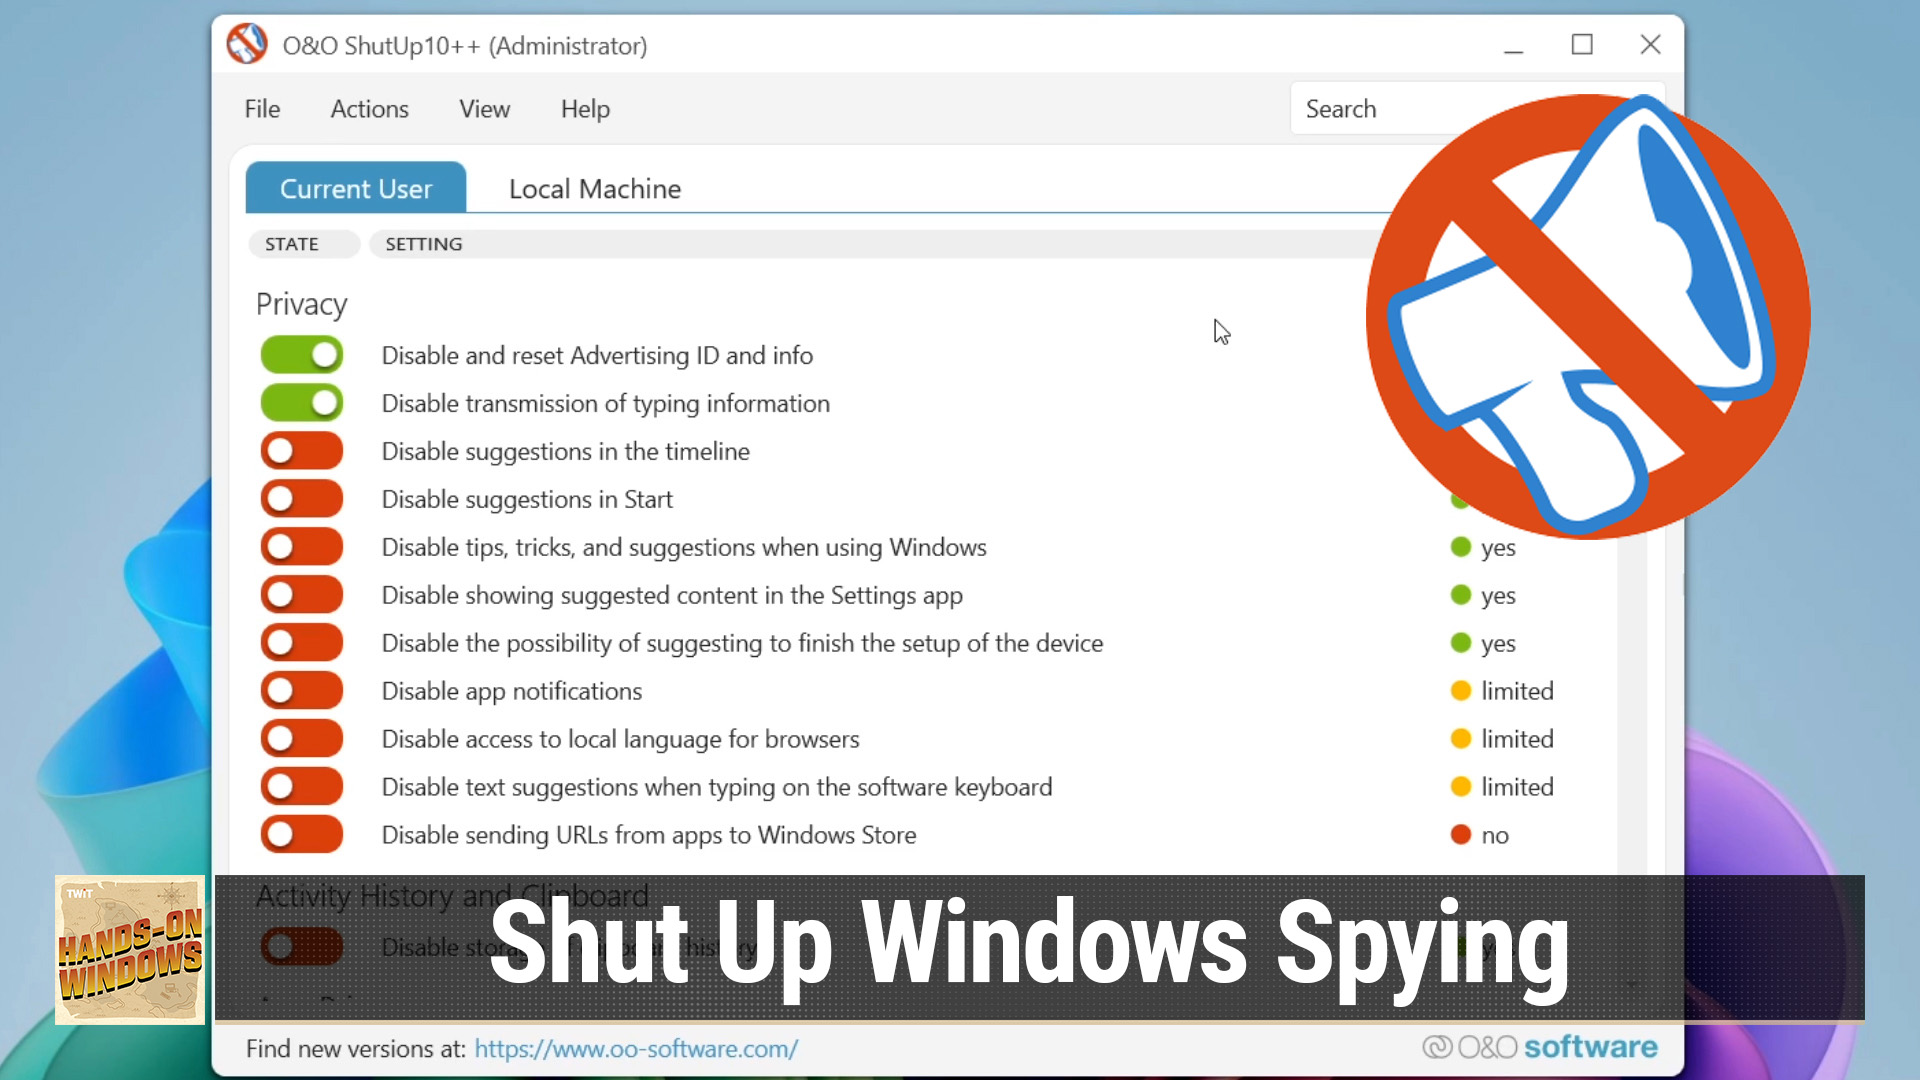 Shut Up Windows Spying (Hands-On Windows #99)